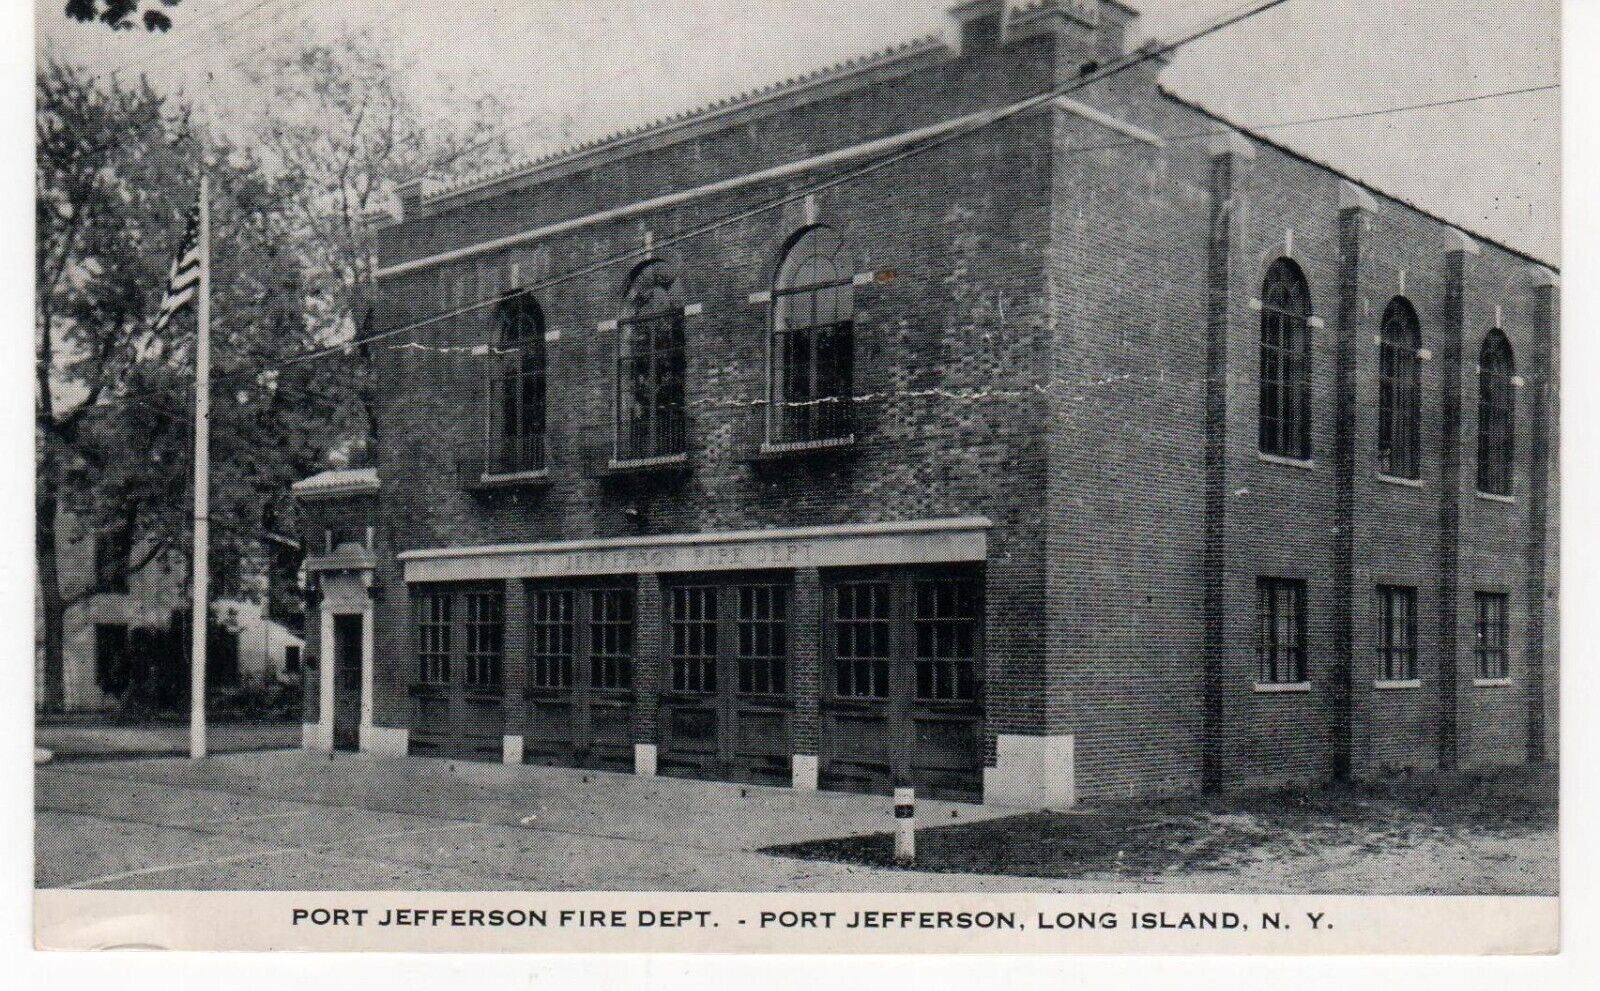 Port Jefferson Long Island NY Fire Department Aug. 01, 1949